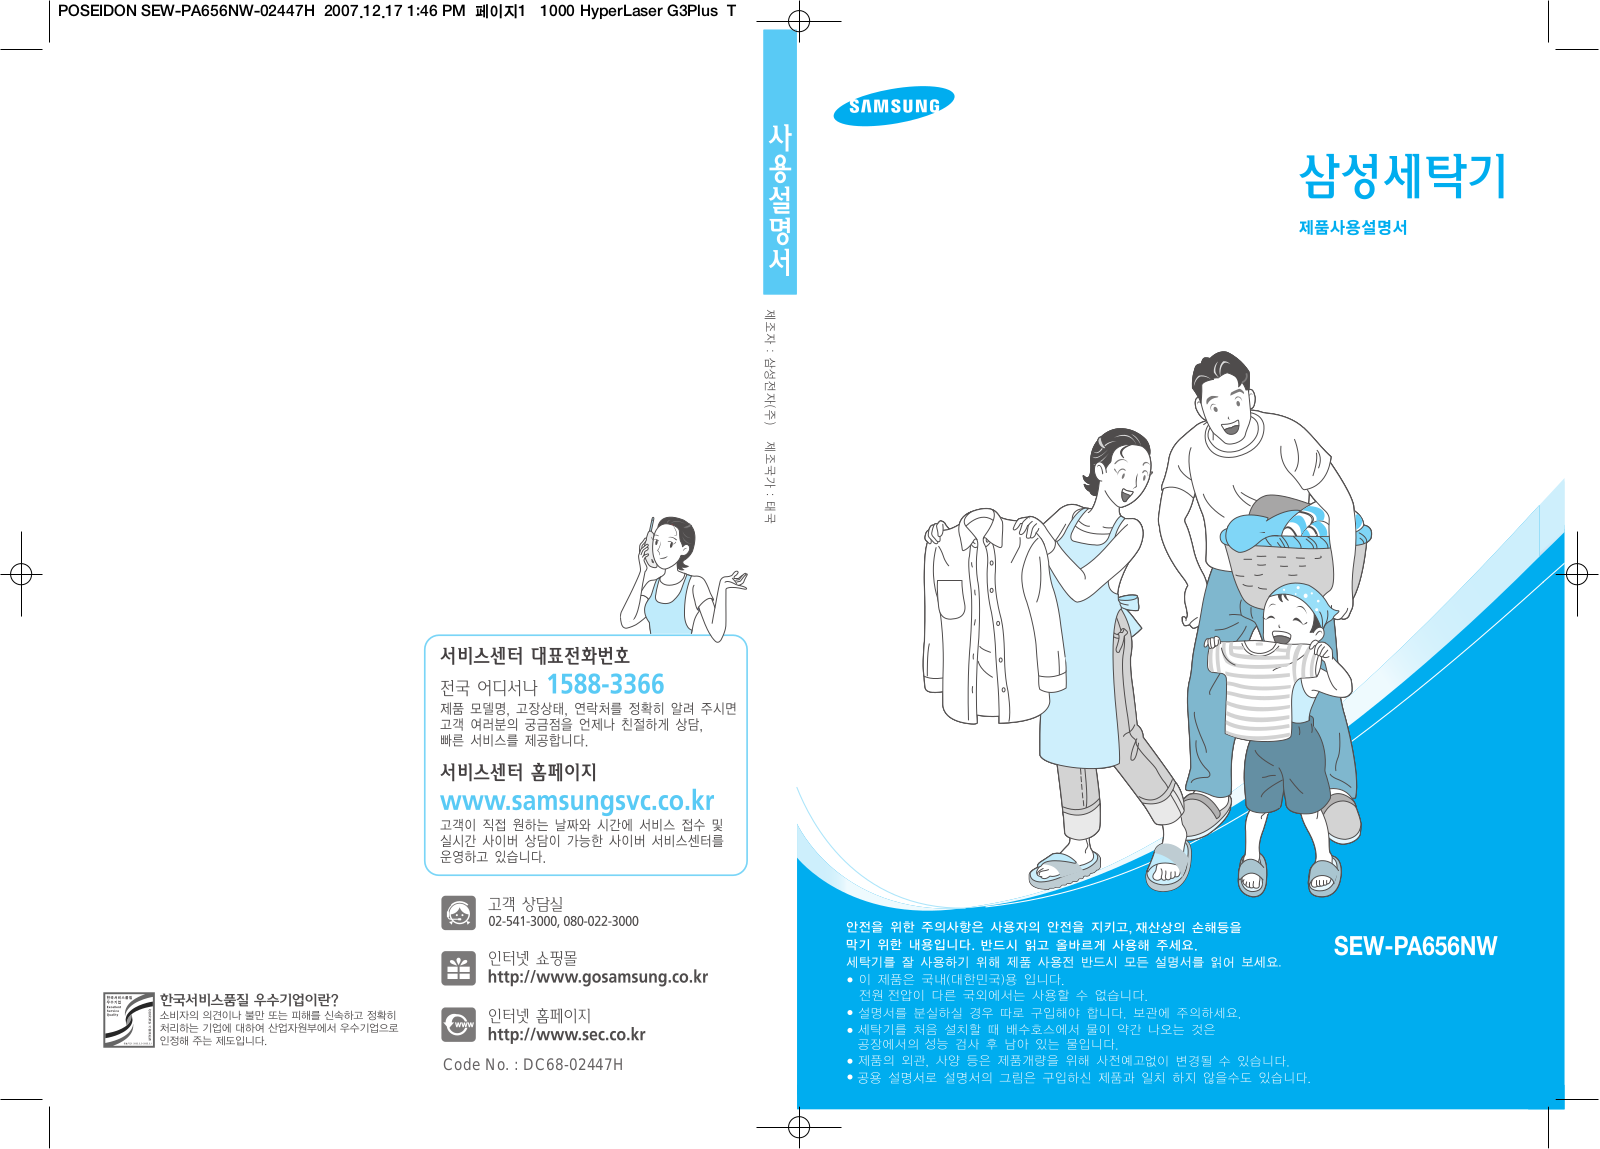 Samsung SEW-PA656NW User Manual